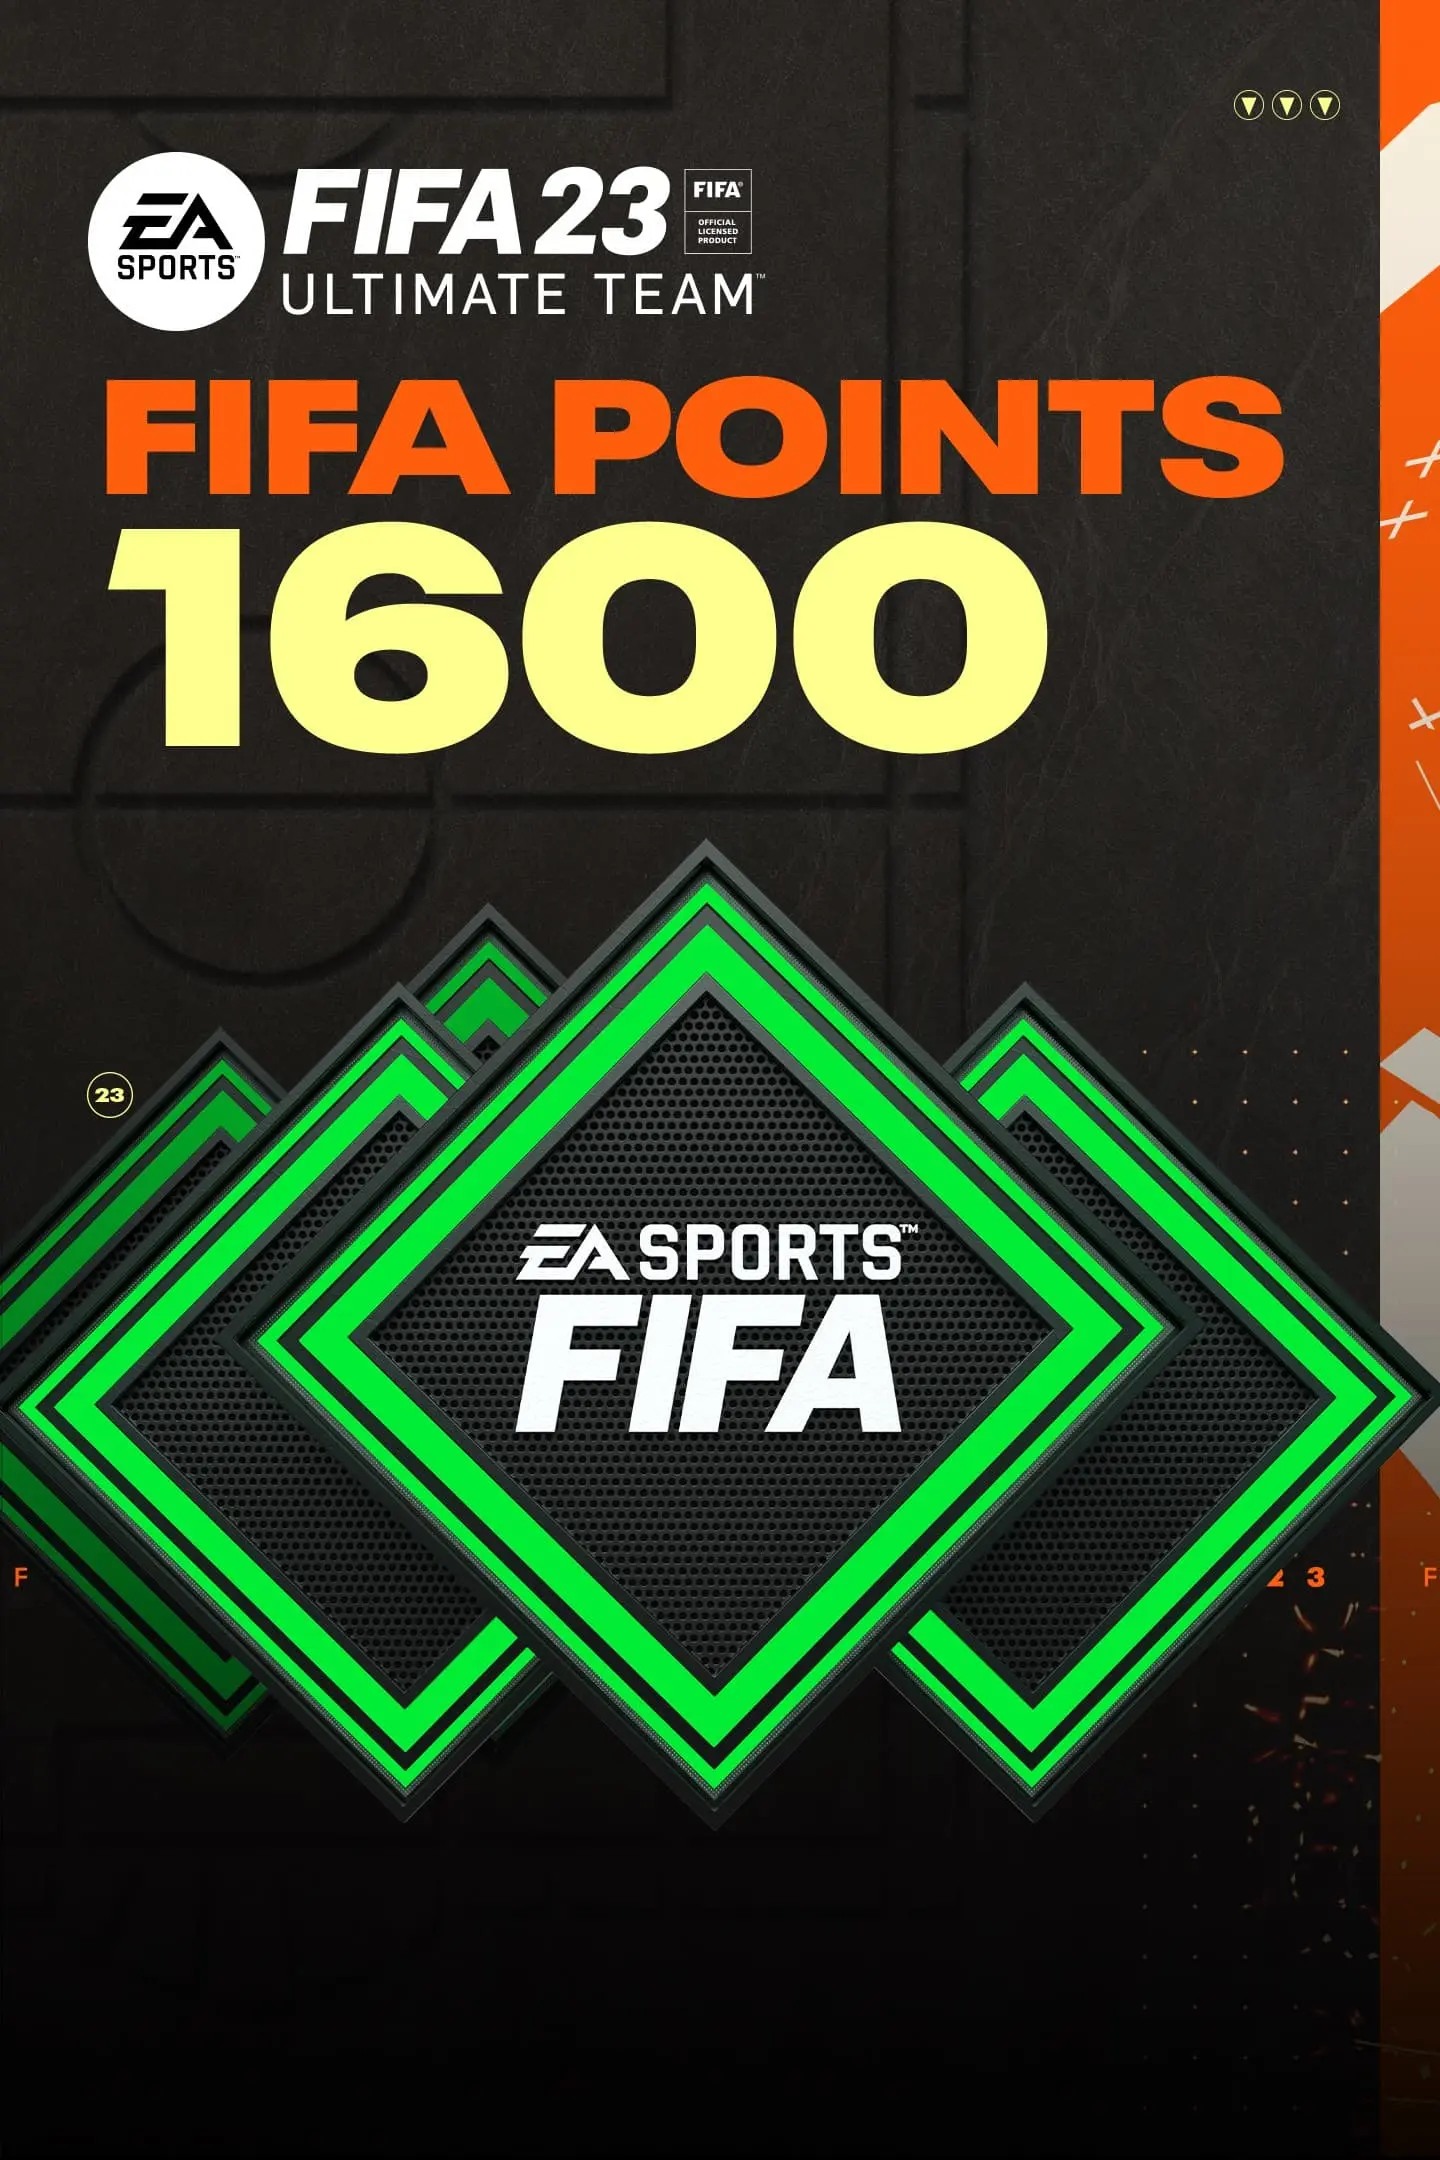 FIFA 23 - 1600 FUT Points (PC) - EA Play - Digital Code